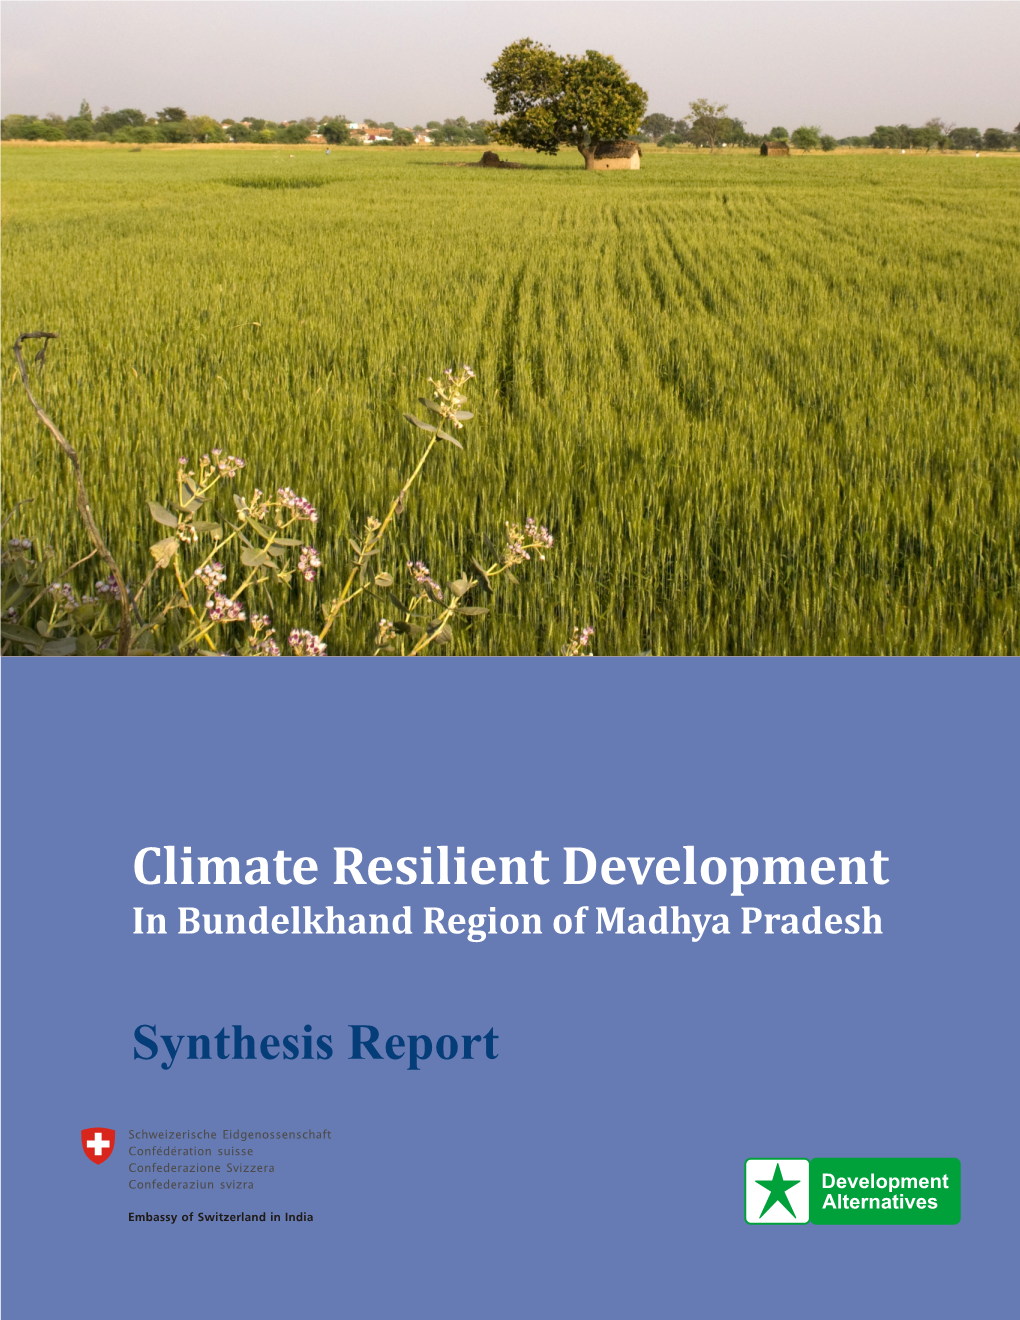 Climate Resilient Development in Bundelkhand Region of Madhya Pradesh